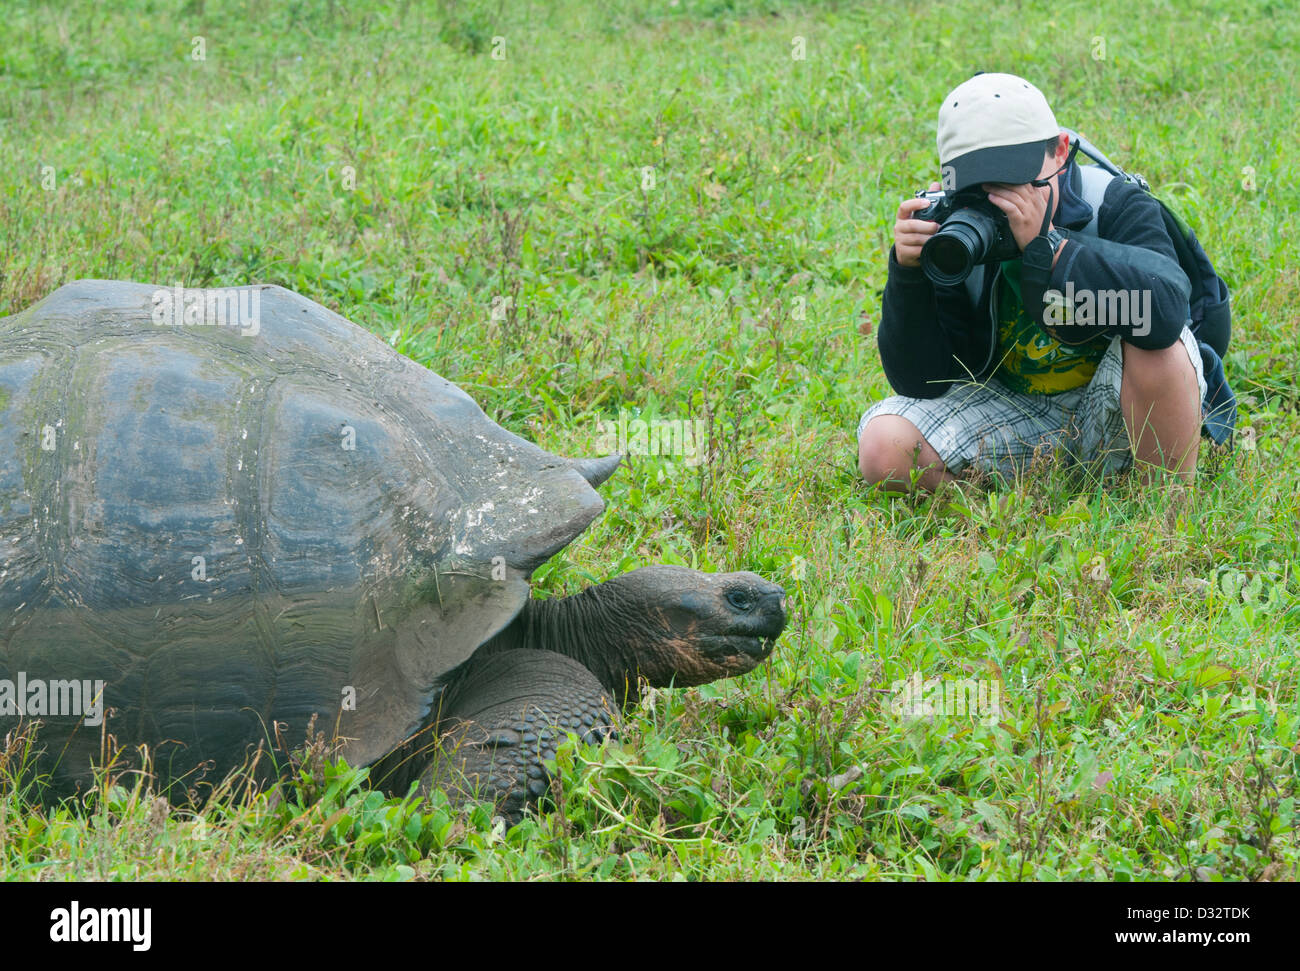 Boy, aged 11, photographing wild Giant Tortoise, Santa Cruz island, Galapagos Stock Photo